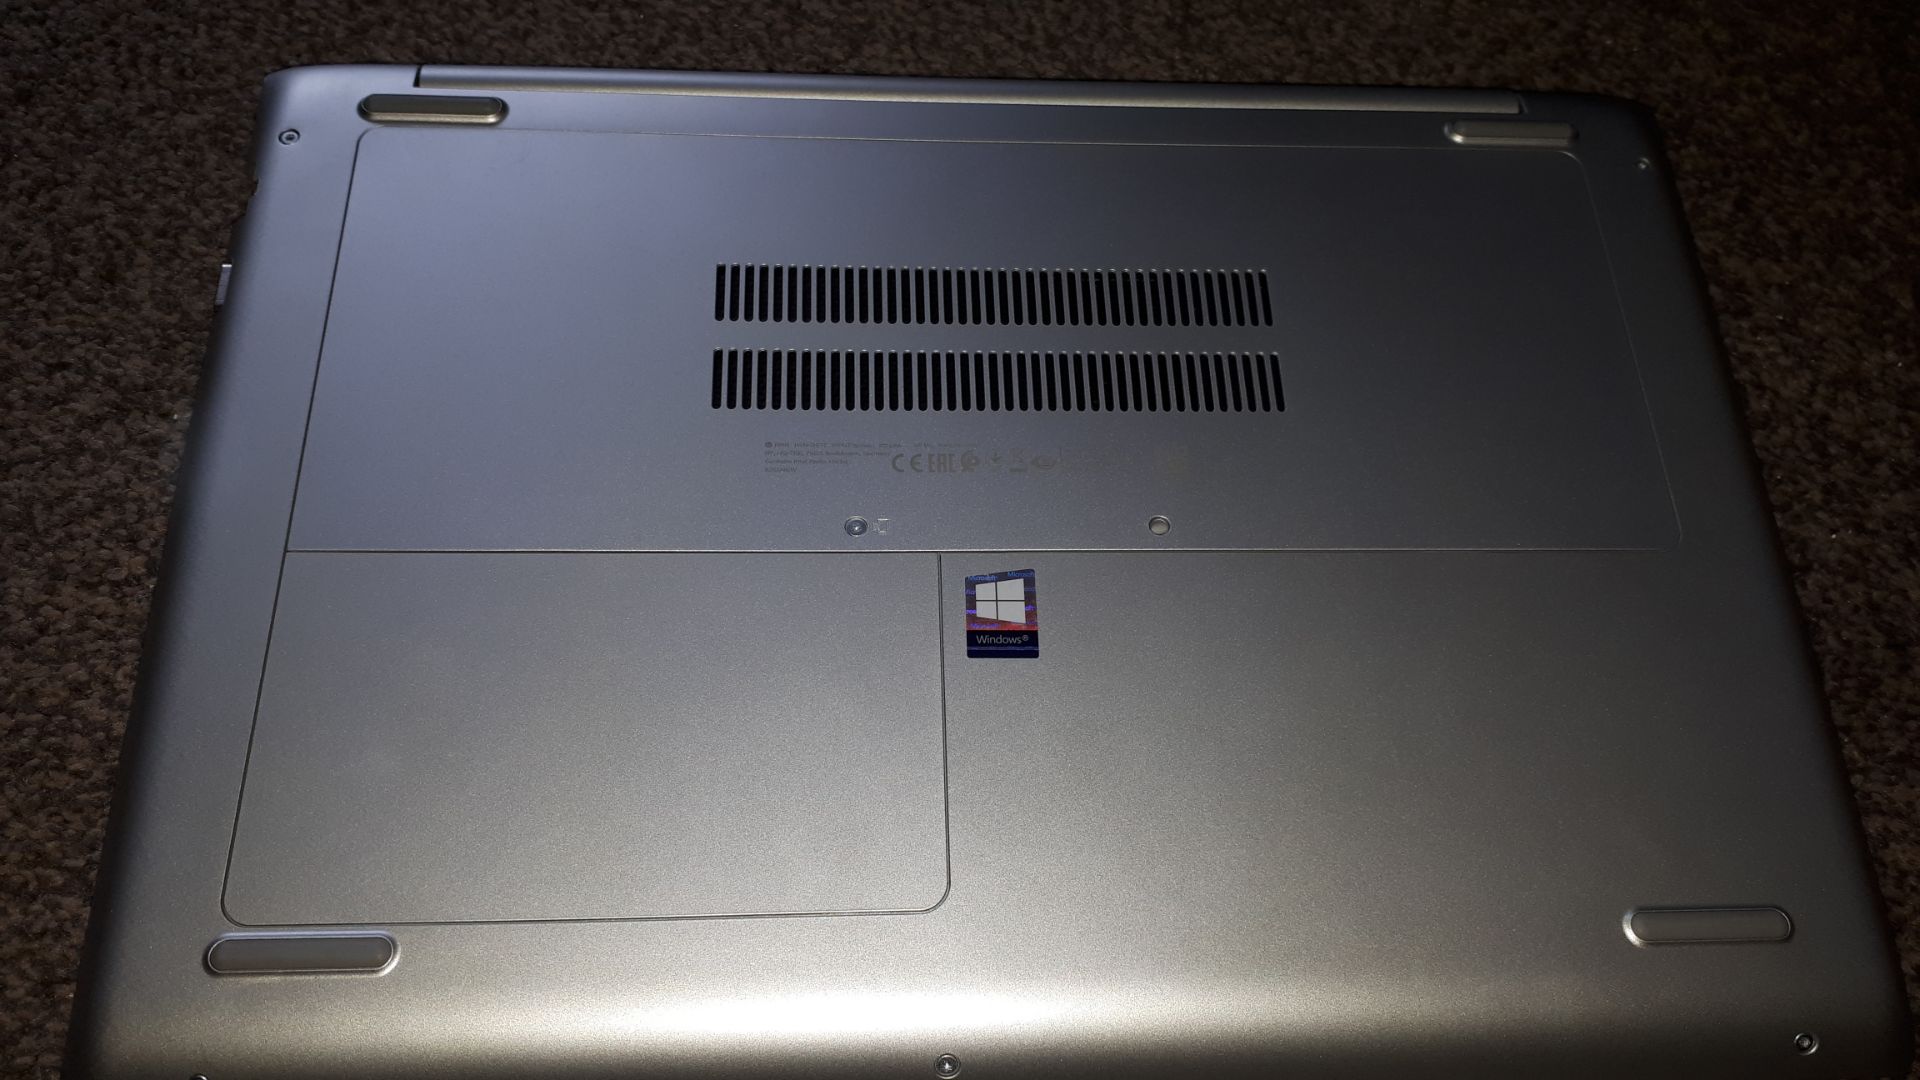 HP ProBook 450 G5 laptop, Serial Number 5CD8228HO6 - Image 4 of 5